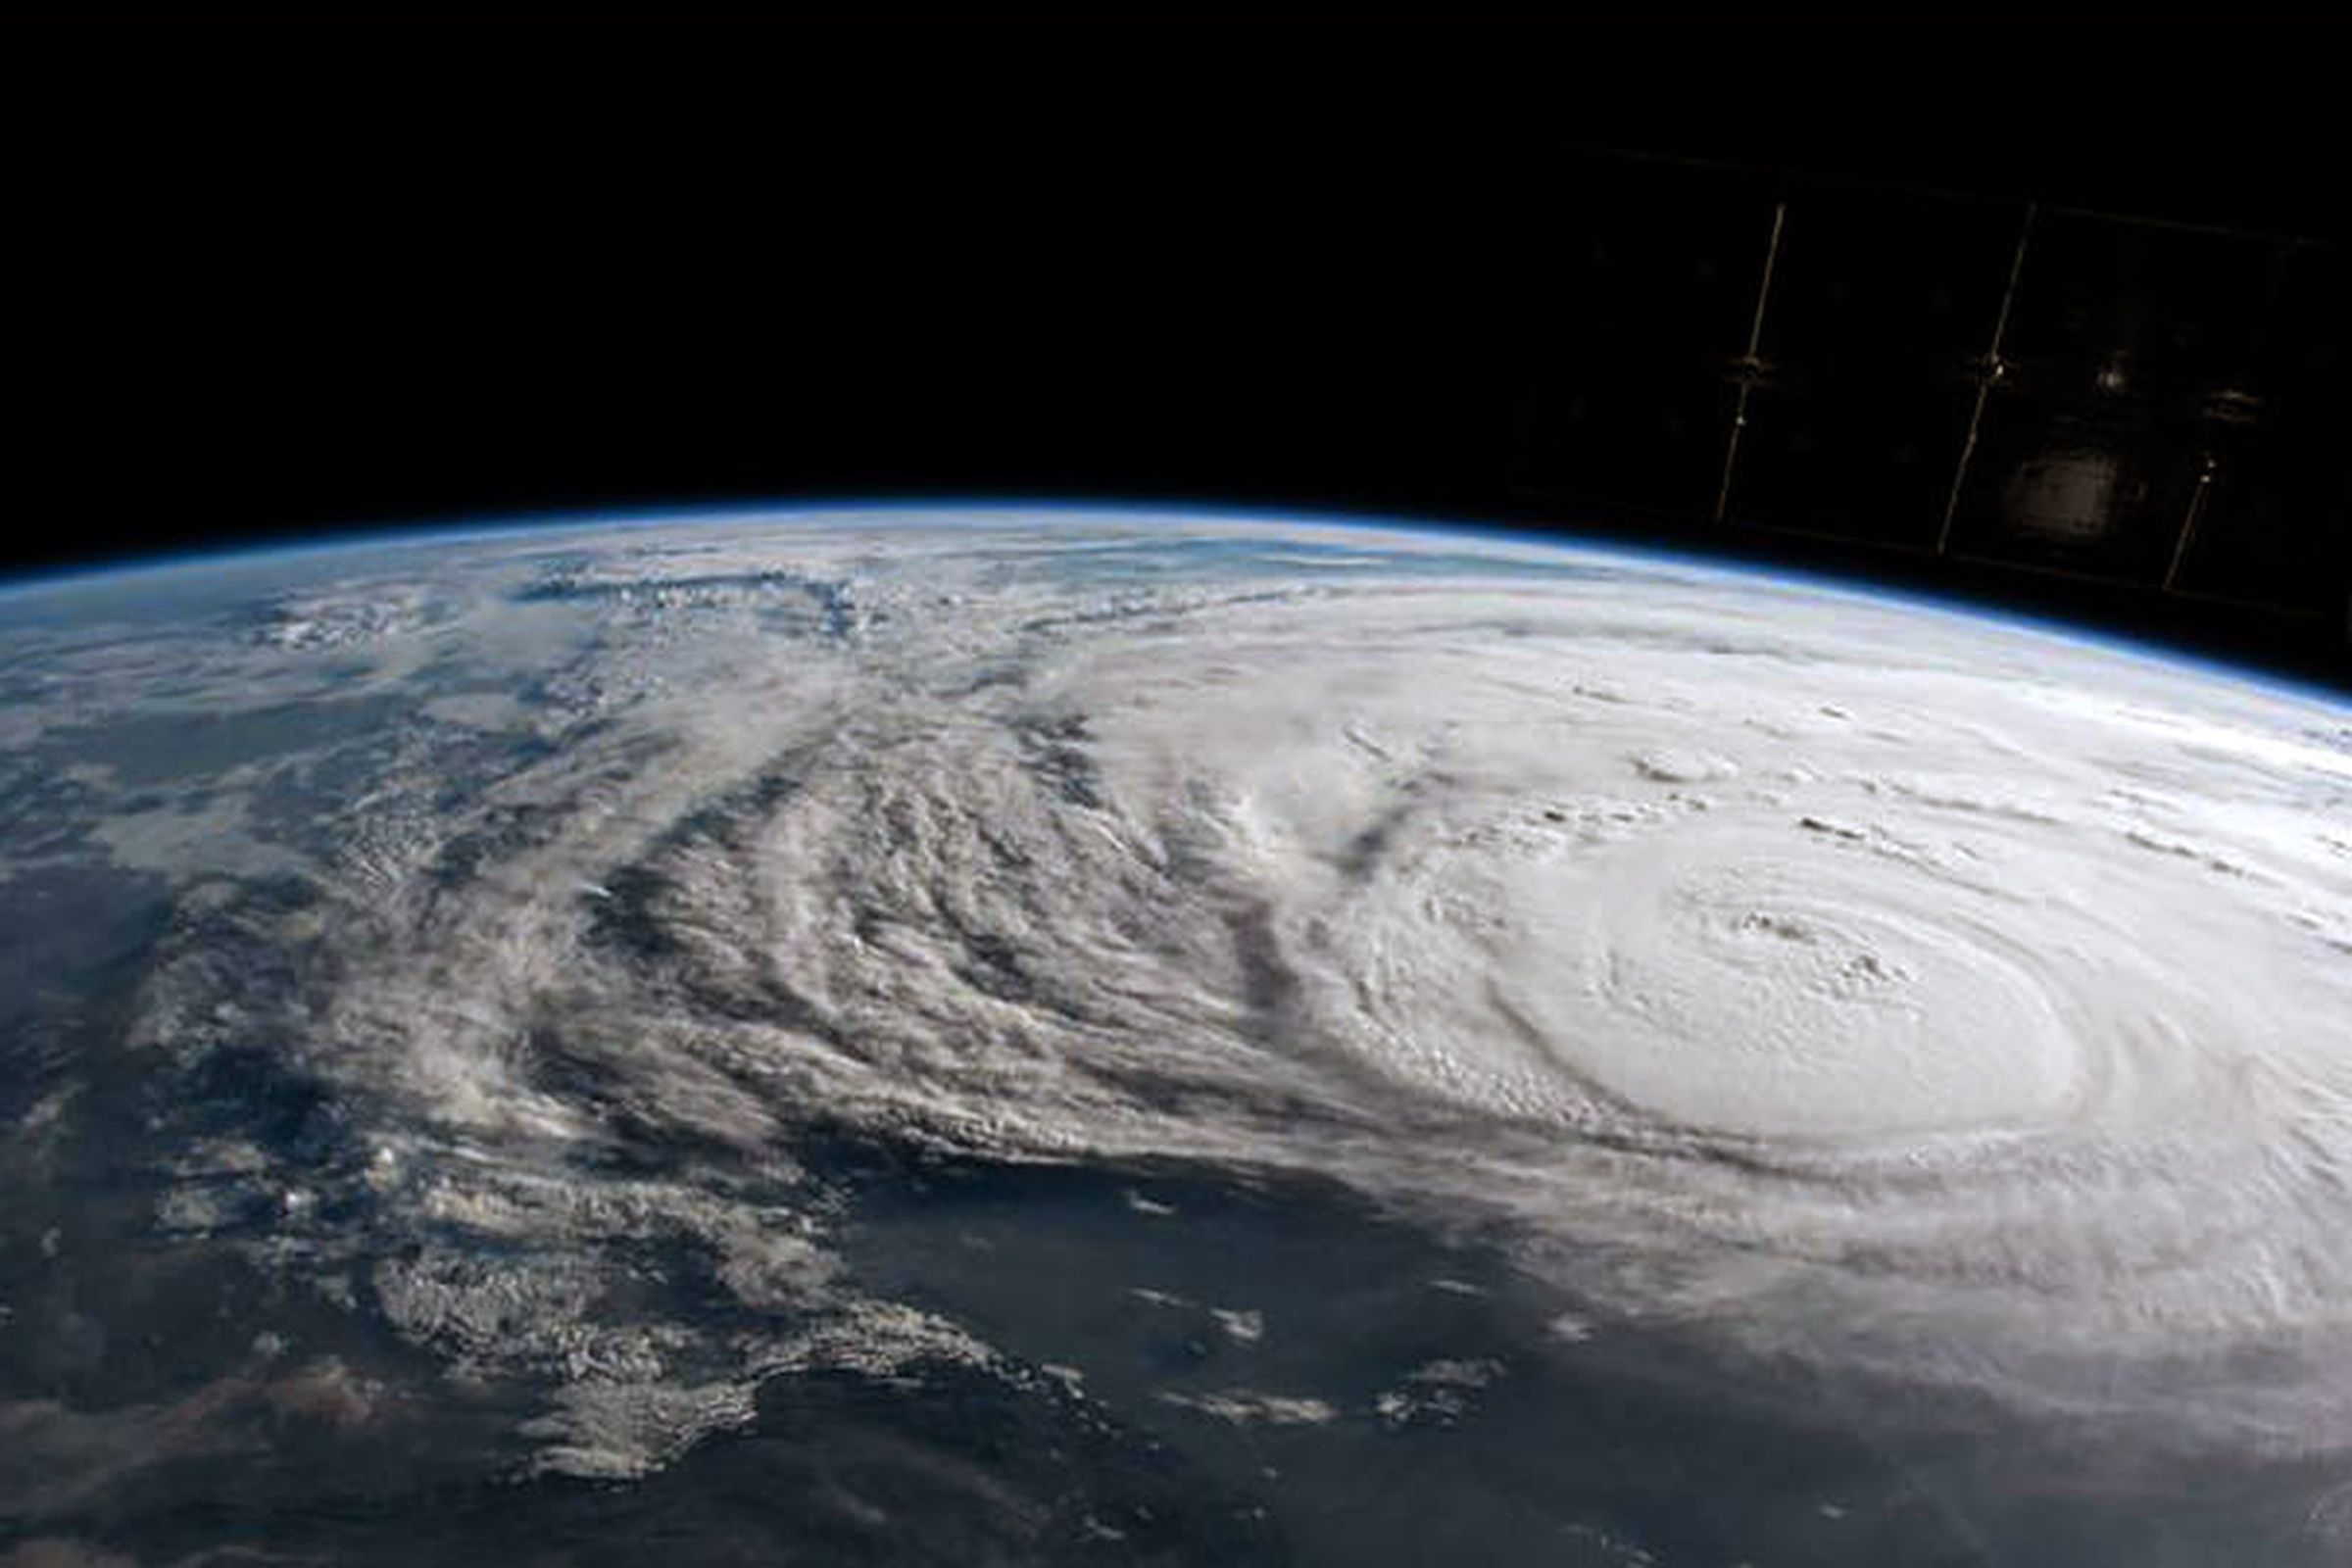 Hurricane Harvey Slams Into Texas Gulf Coast